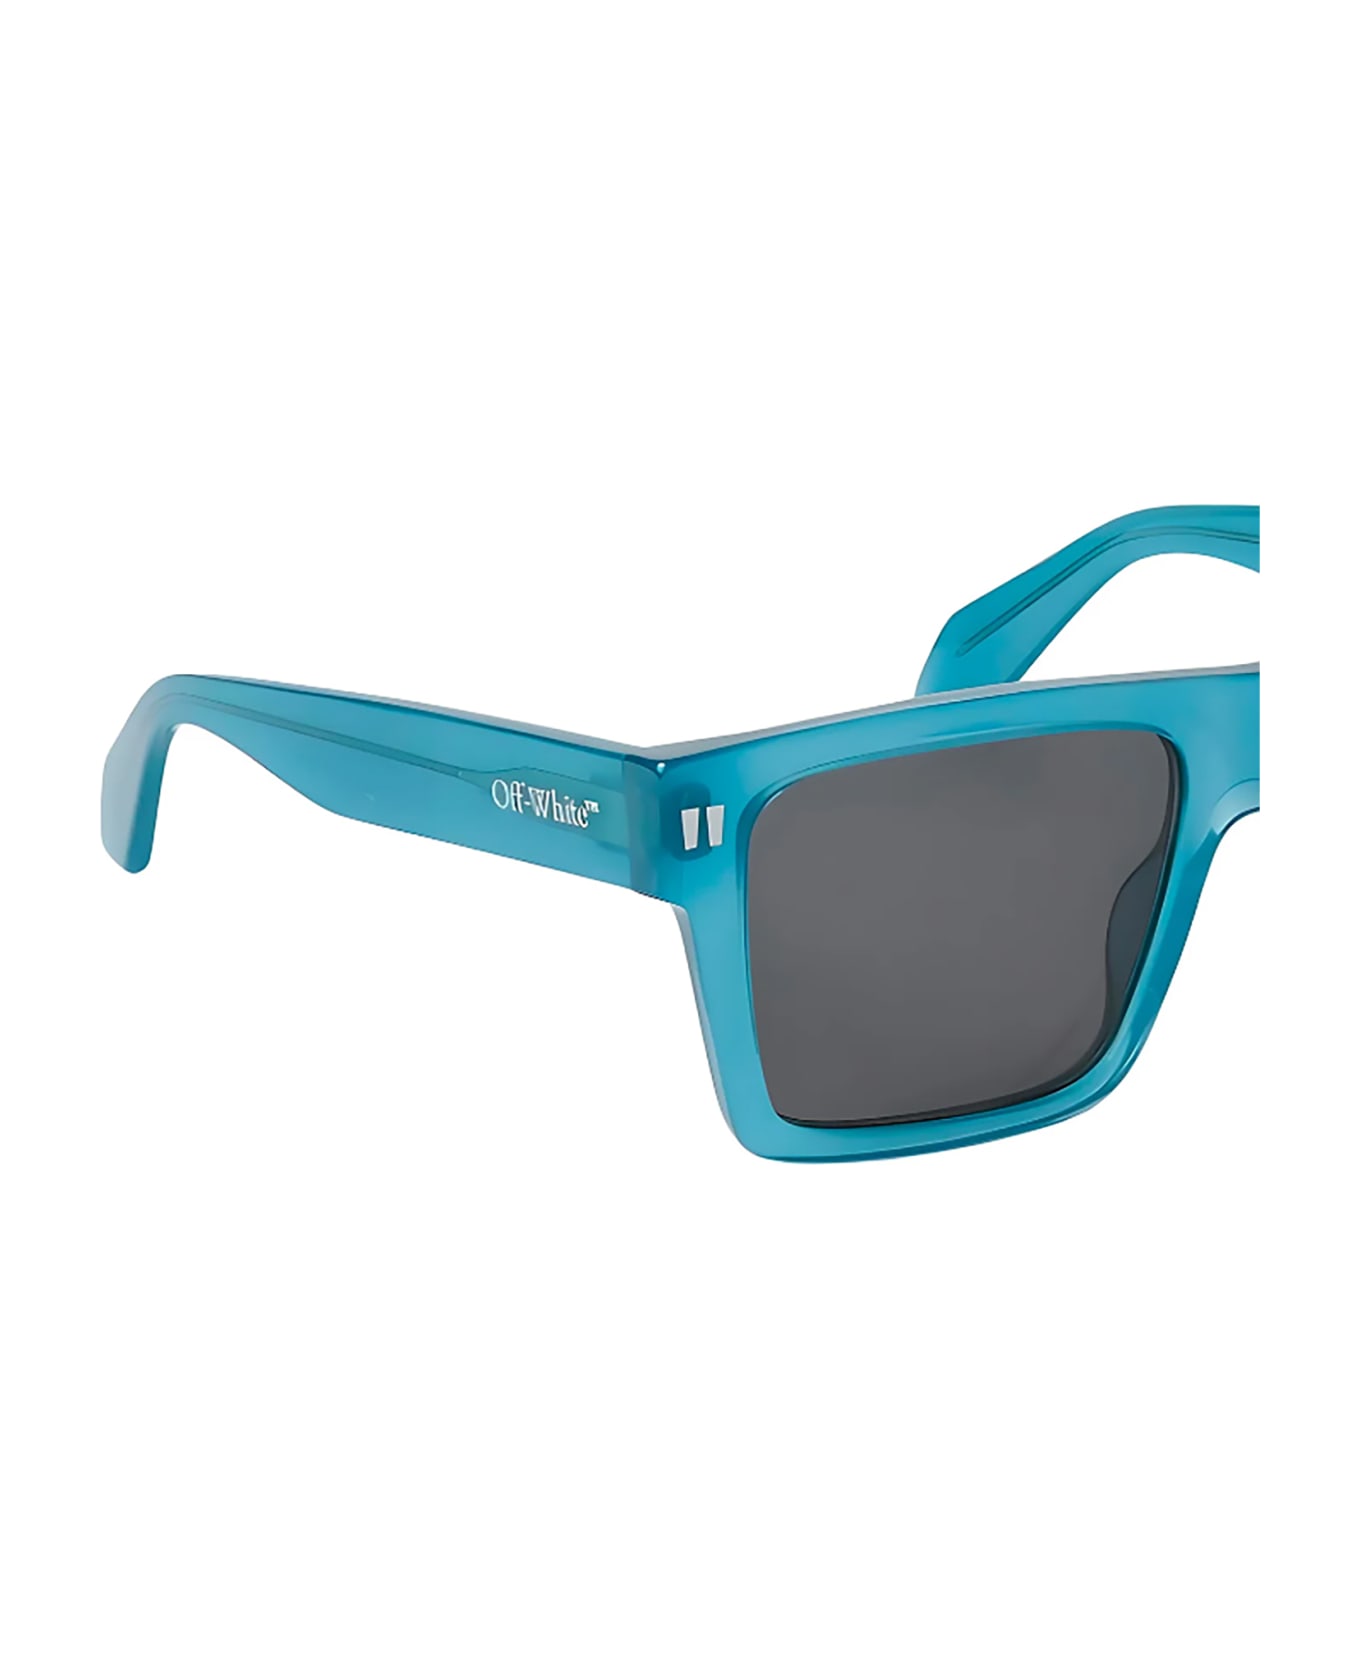 Off-White OERI109 LAWTON Sunglasses - Navy Blue